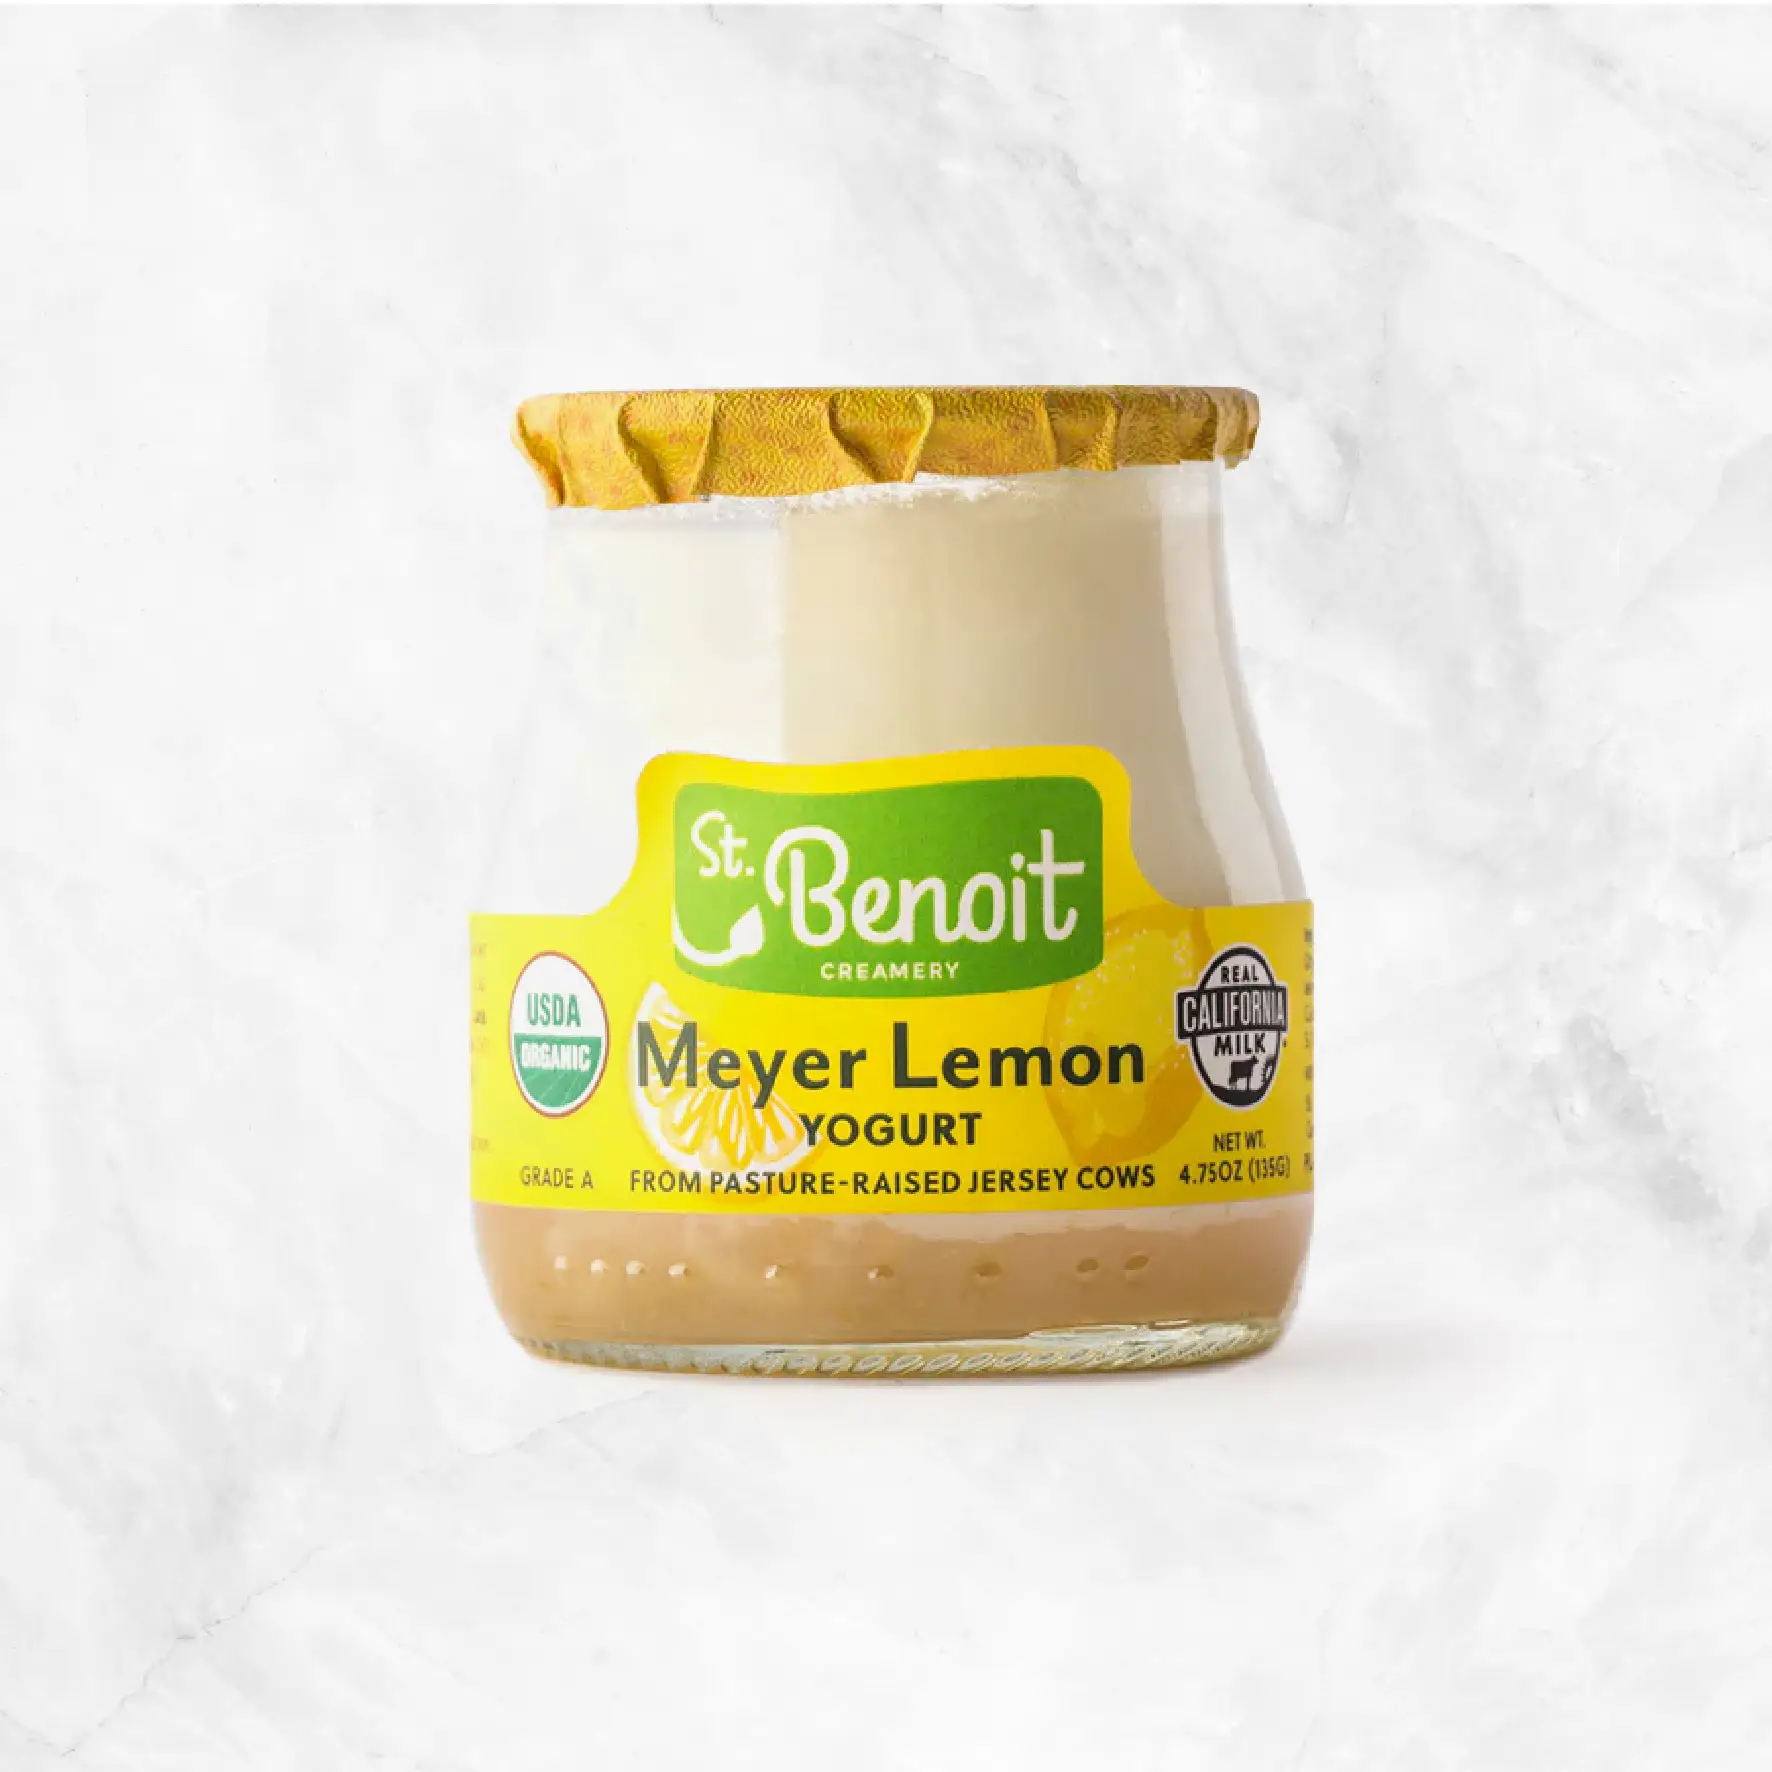 Meyer Lemon Yogurt Delivery